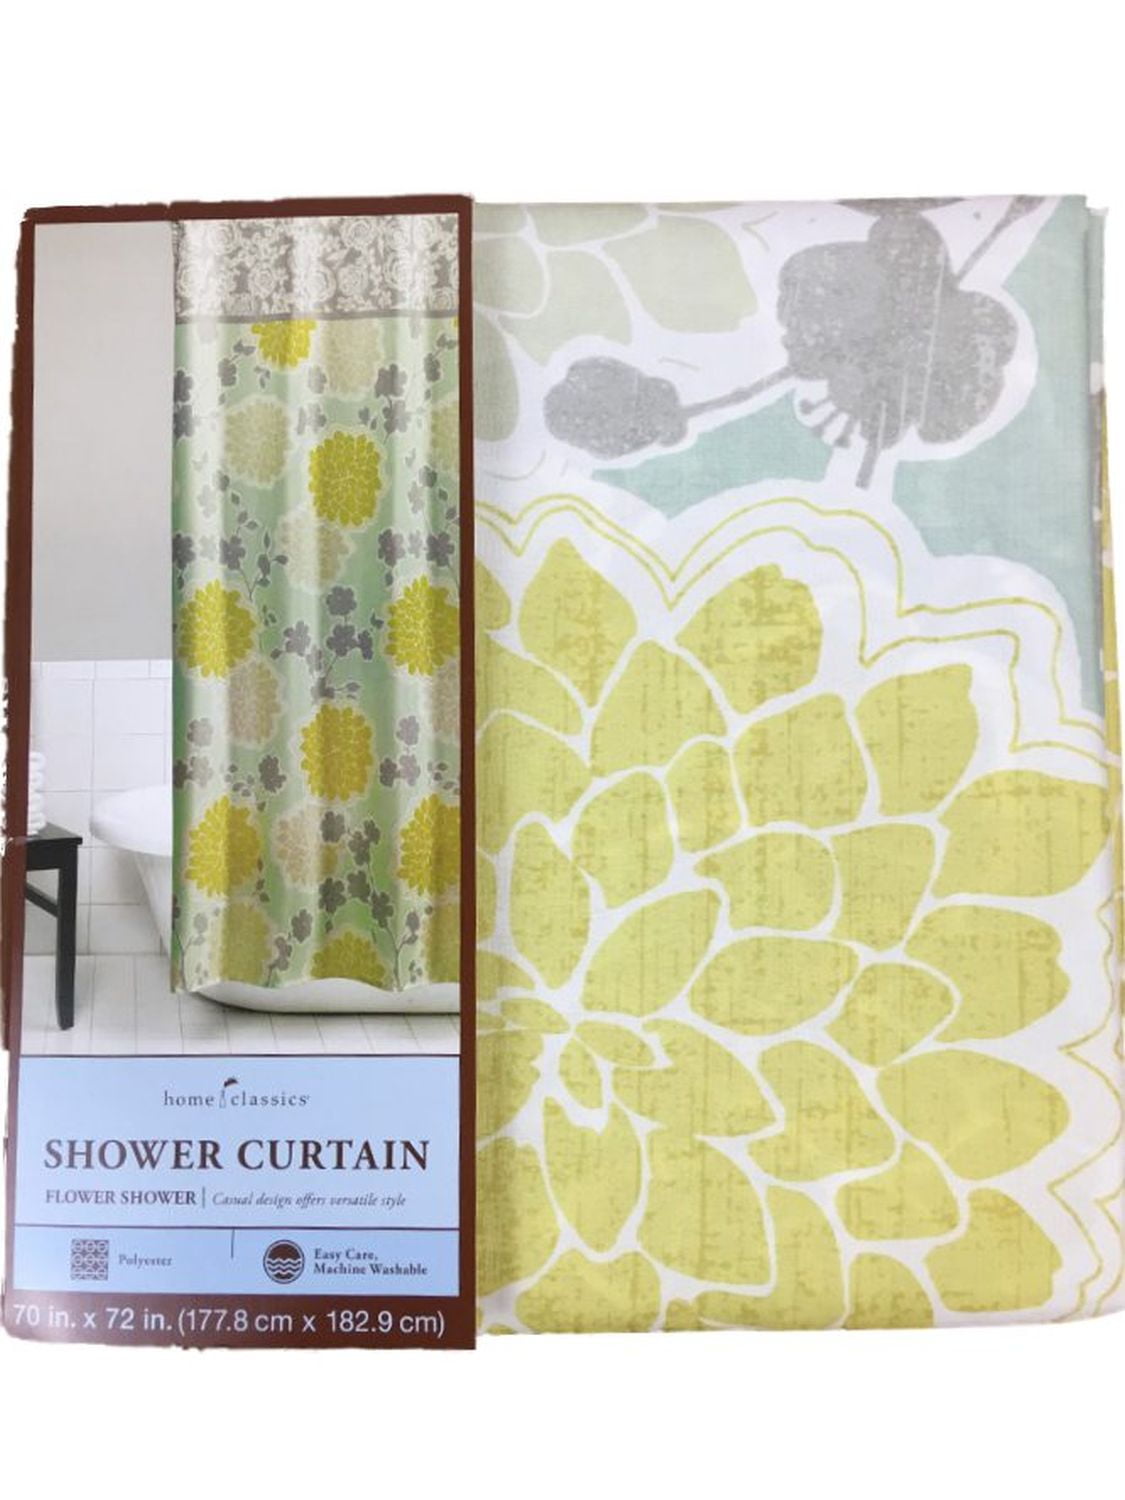 Home Classics Flower Shower Fabric, Home Classics Ruffle Ombre Fabric Shower Curtain